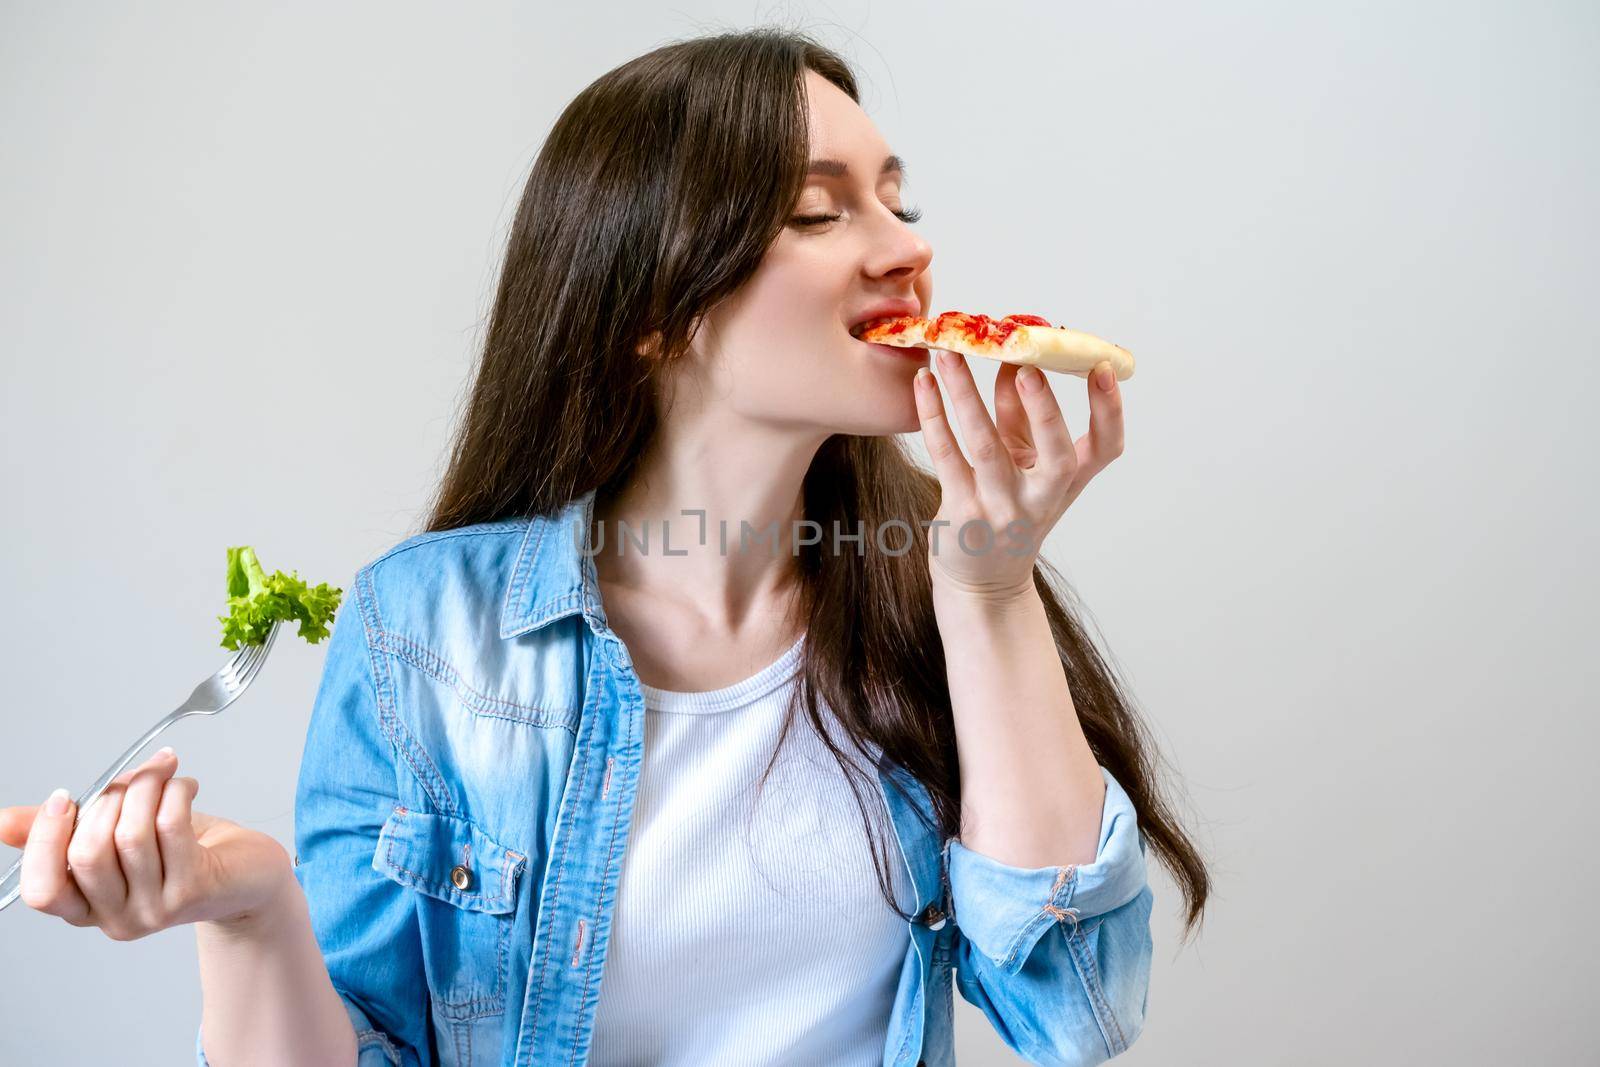 Young beautiful woman breaks the diet, but happy eats pizza instead of salad by Svetlana_Belozerova